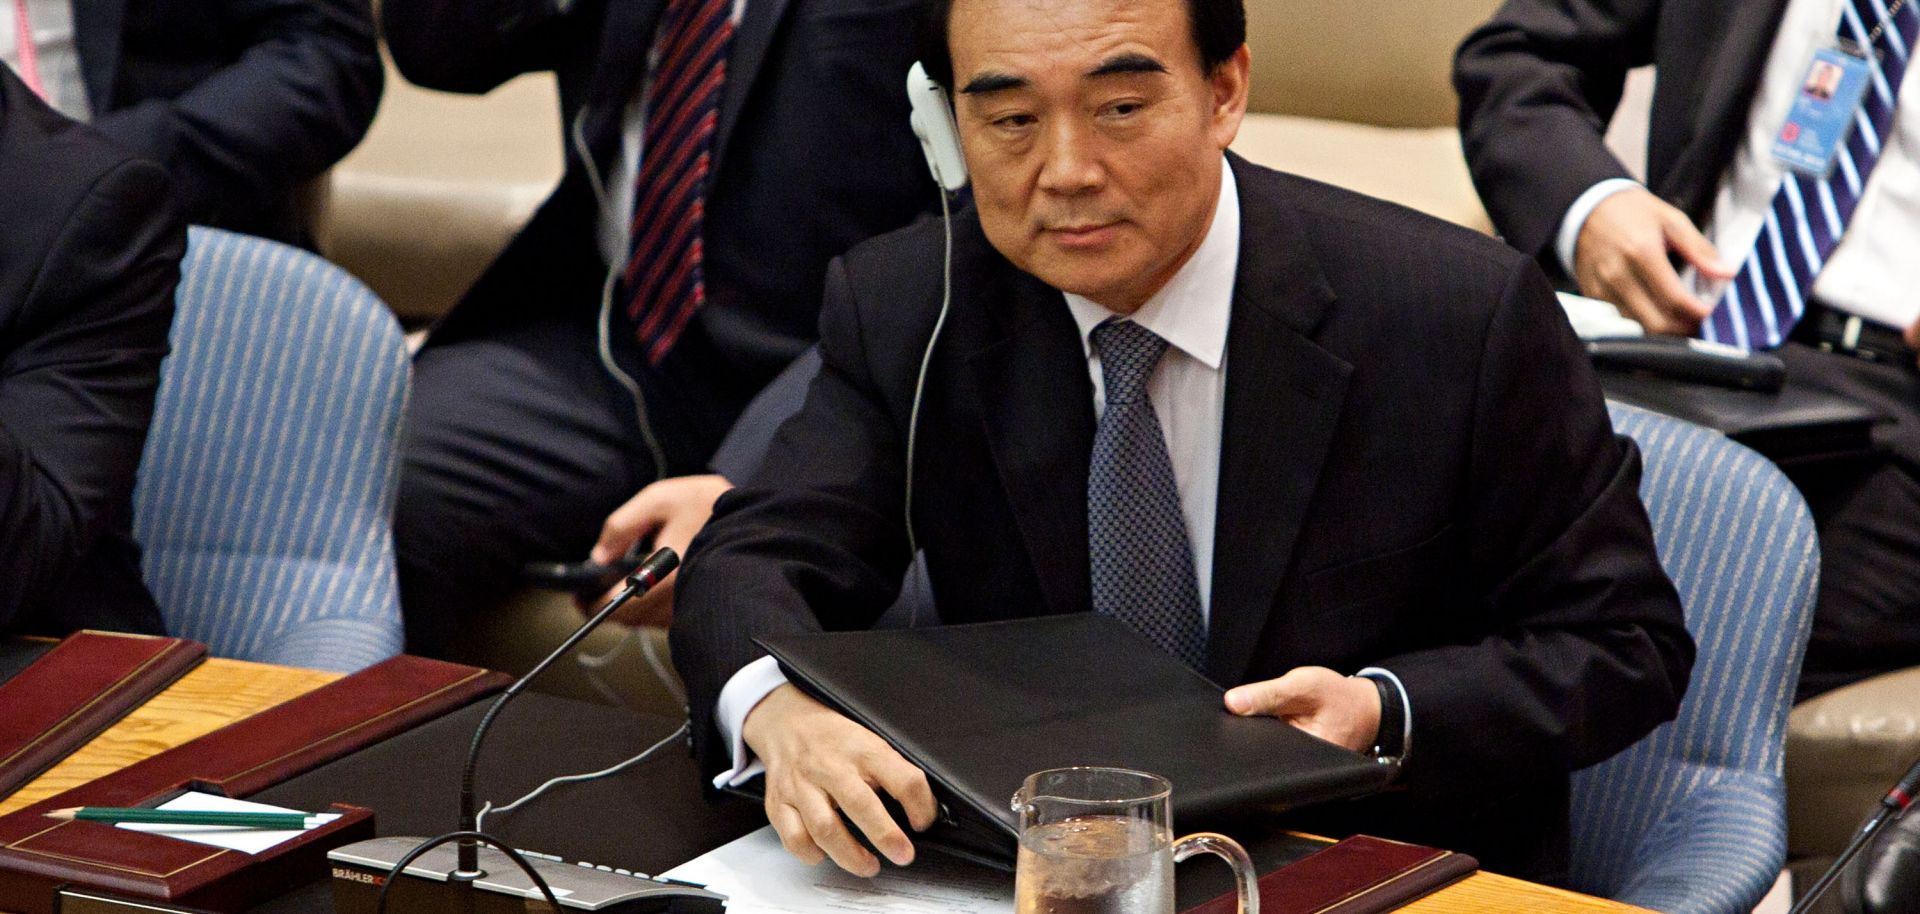 Mali: China Commits 500 Soldiers to U.N. Mission